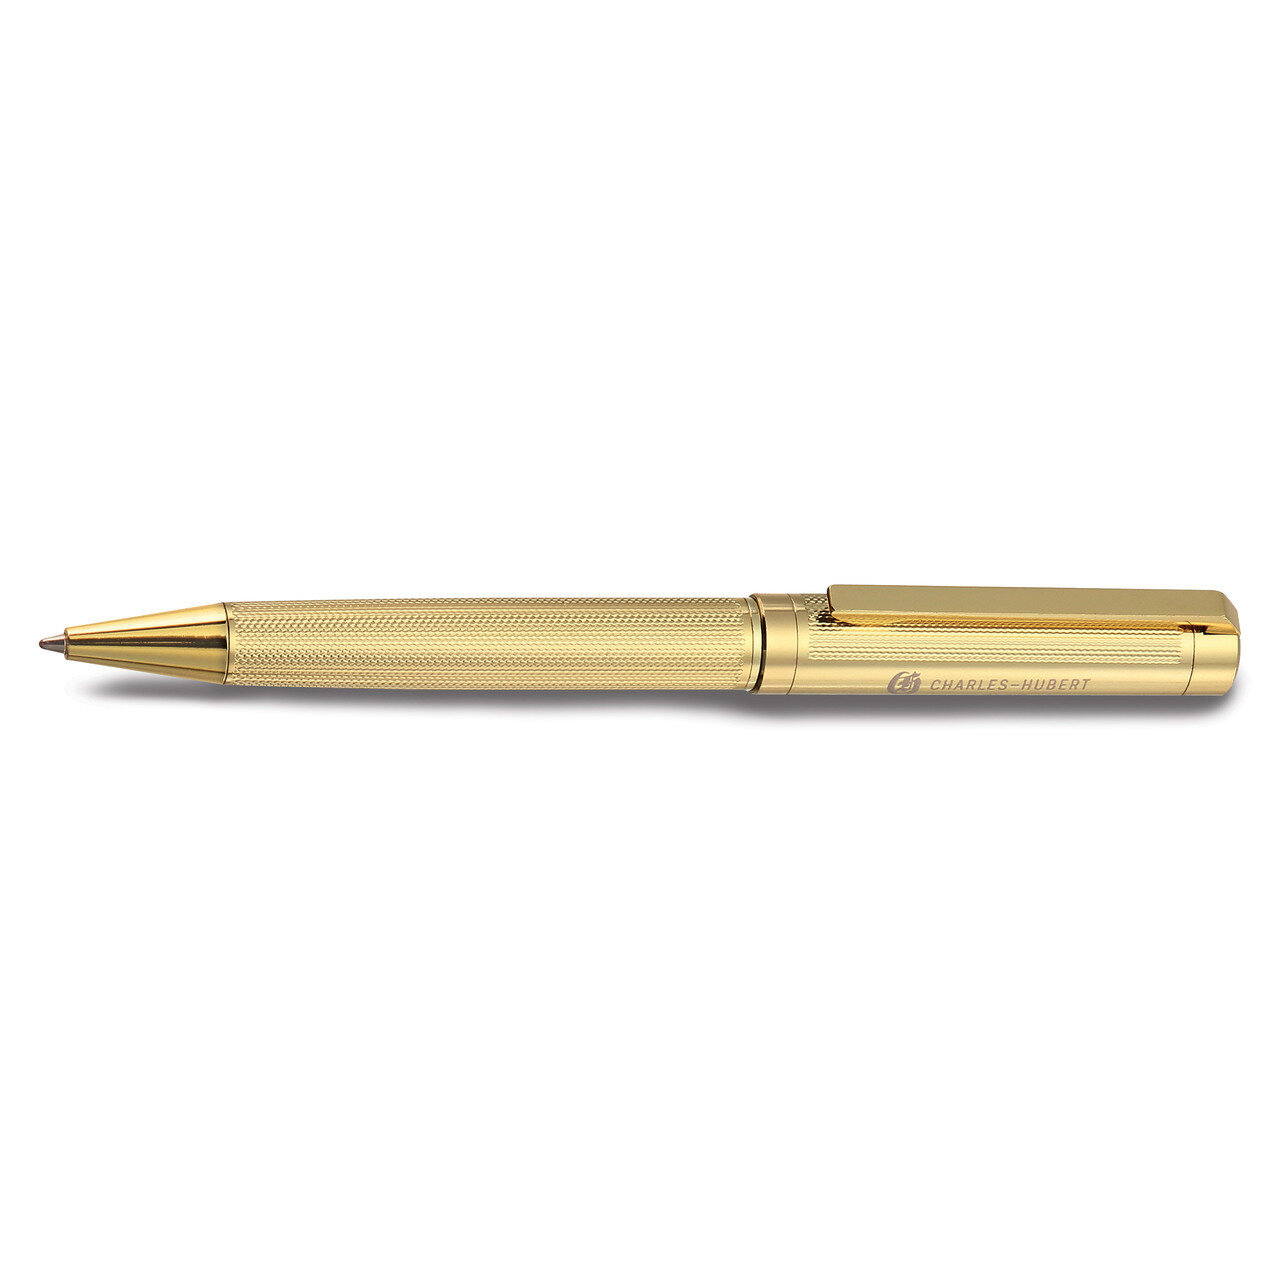 Charles-Hubert Gold-tone Finish Ballpoint Pen GM13654